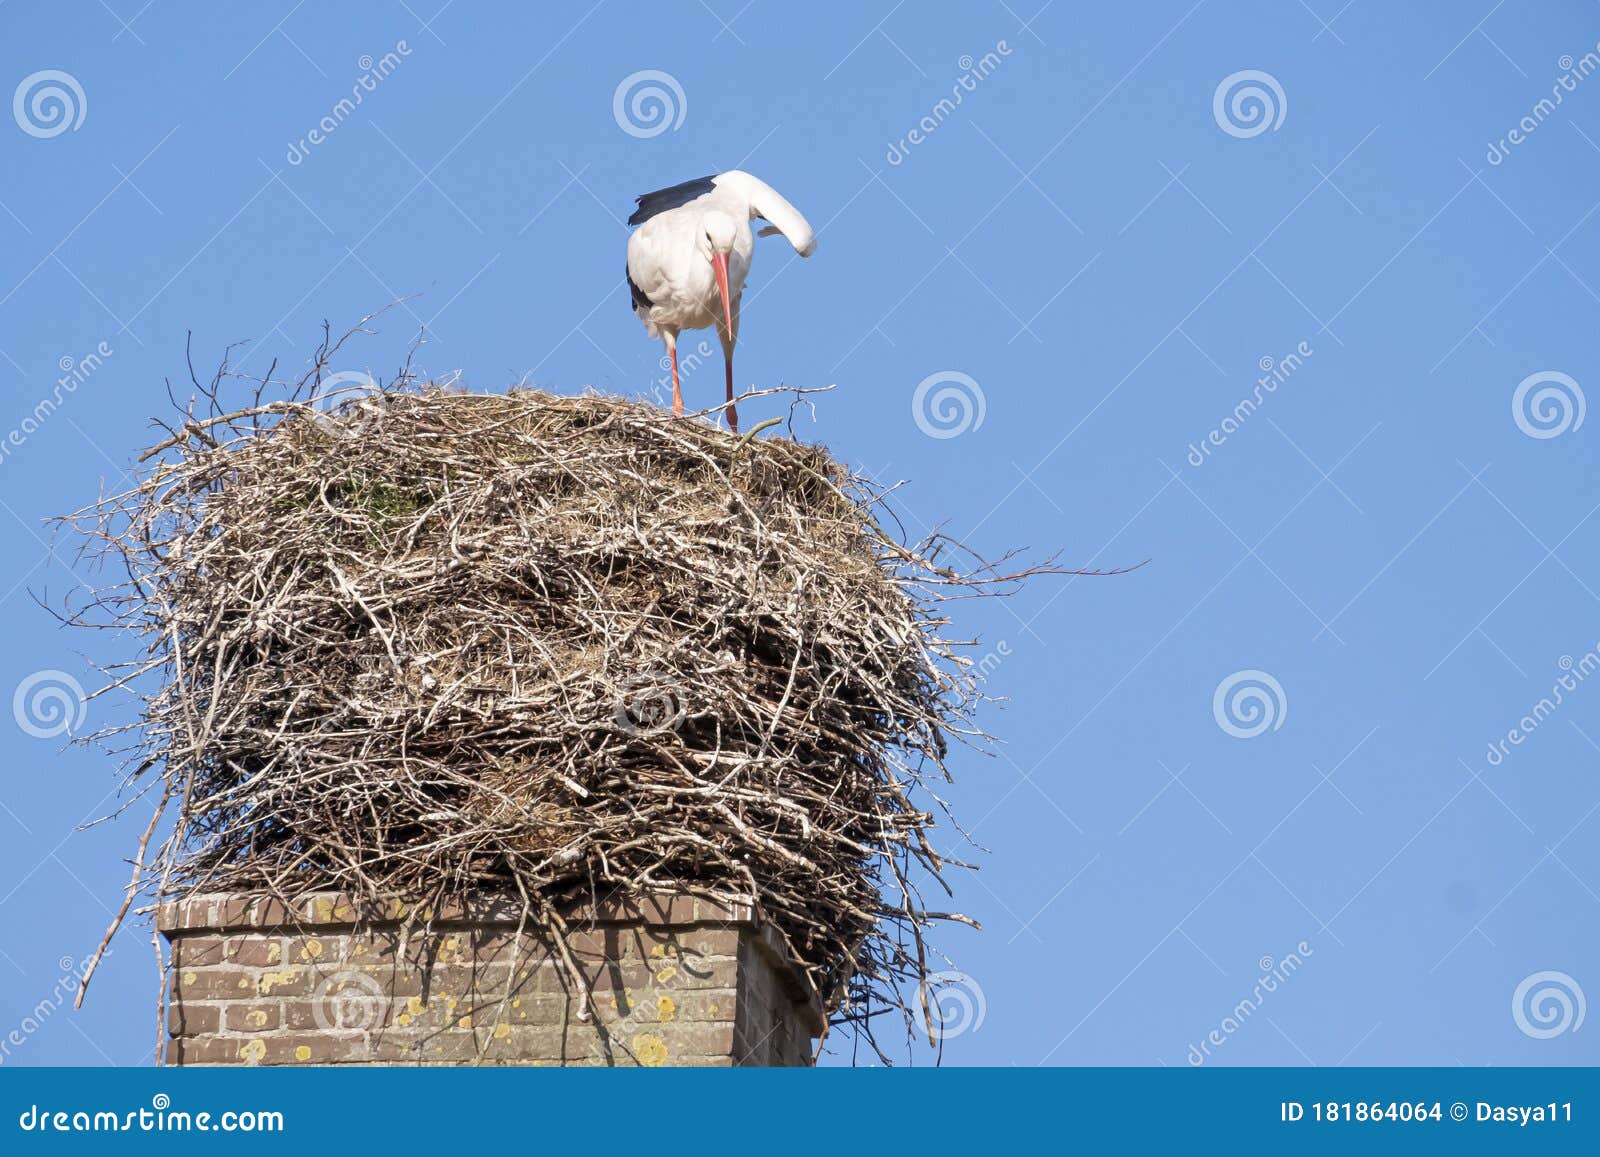 Nh bird nest